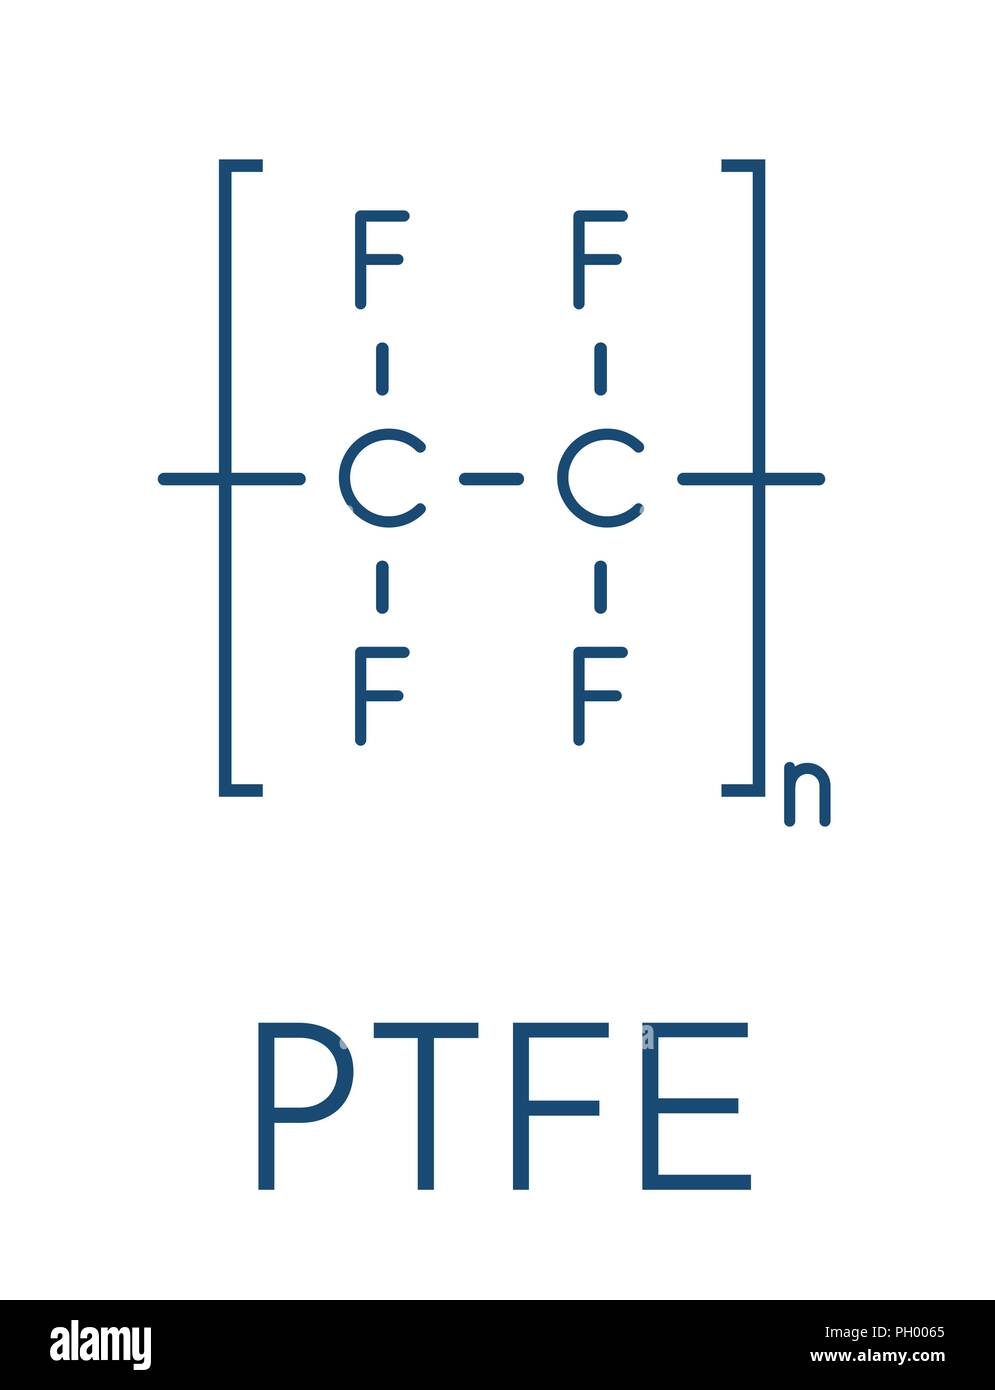 PTFE - Polytetrafluoroethylene